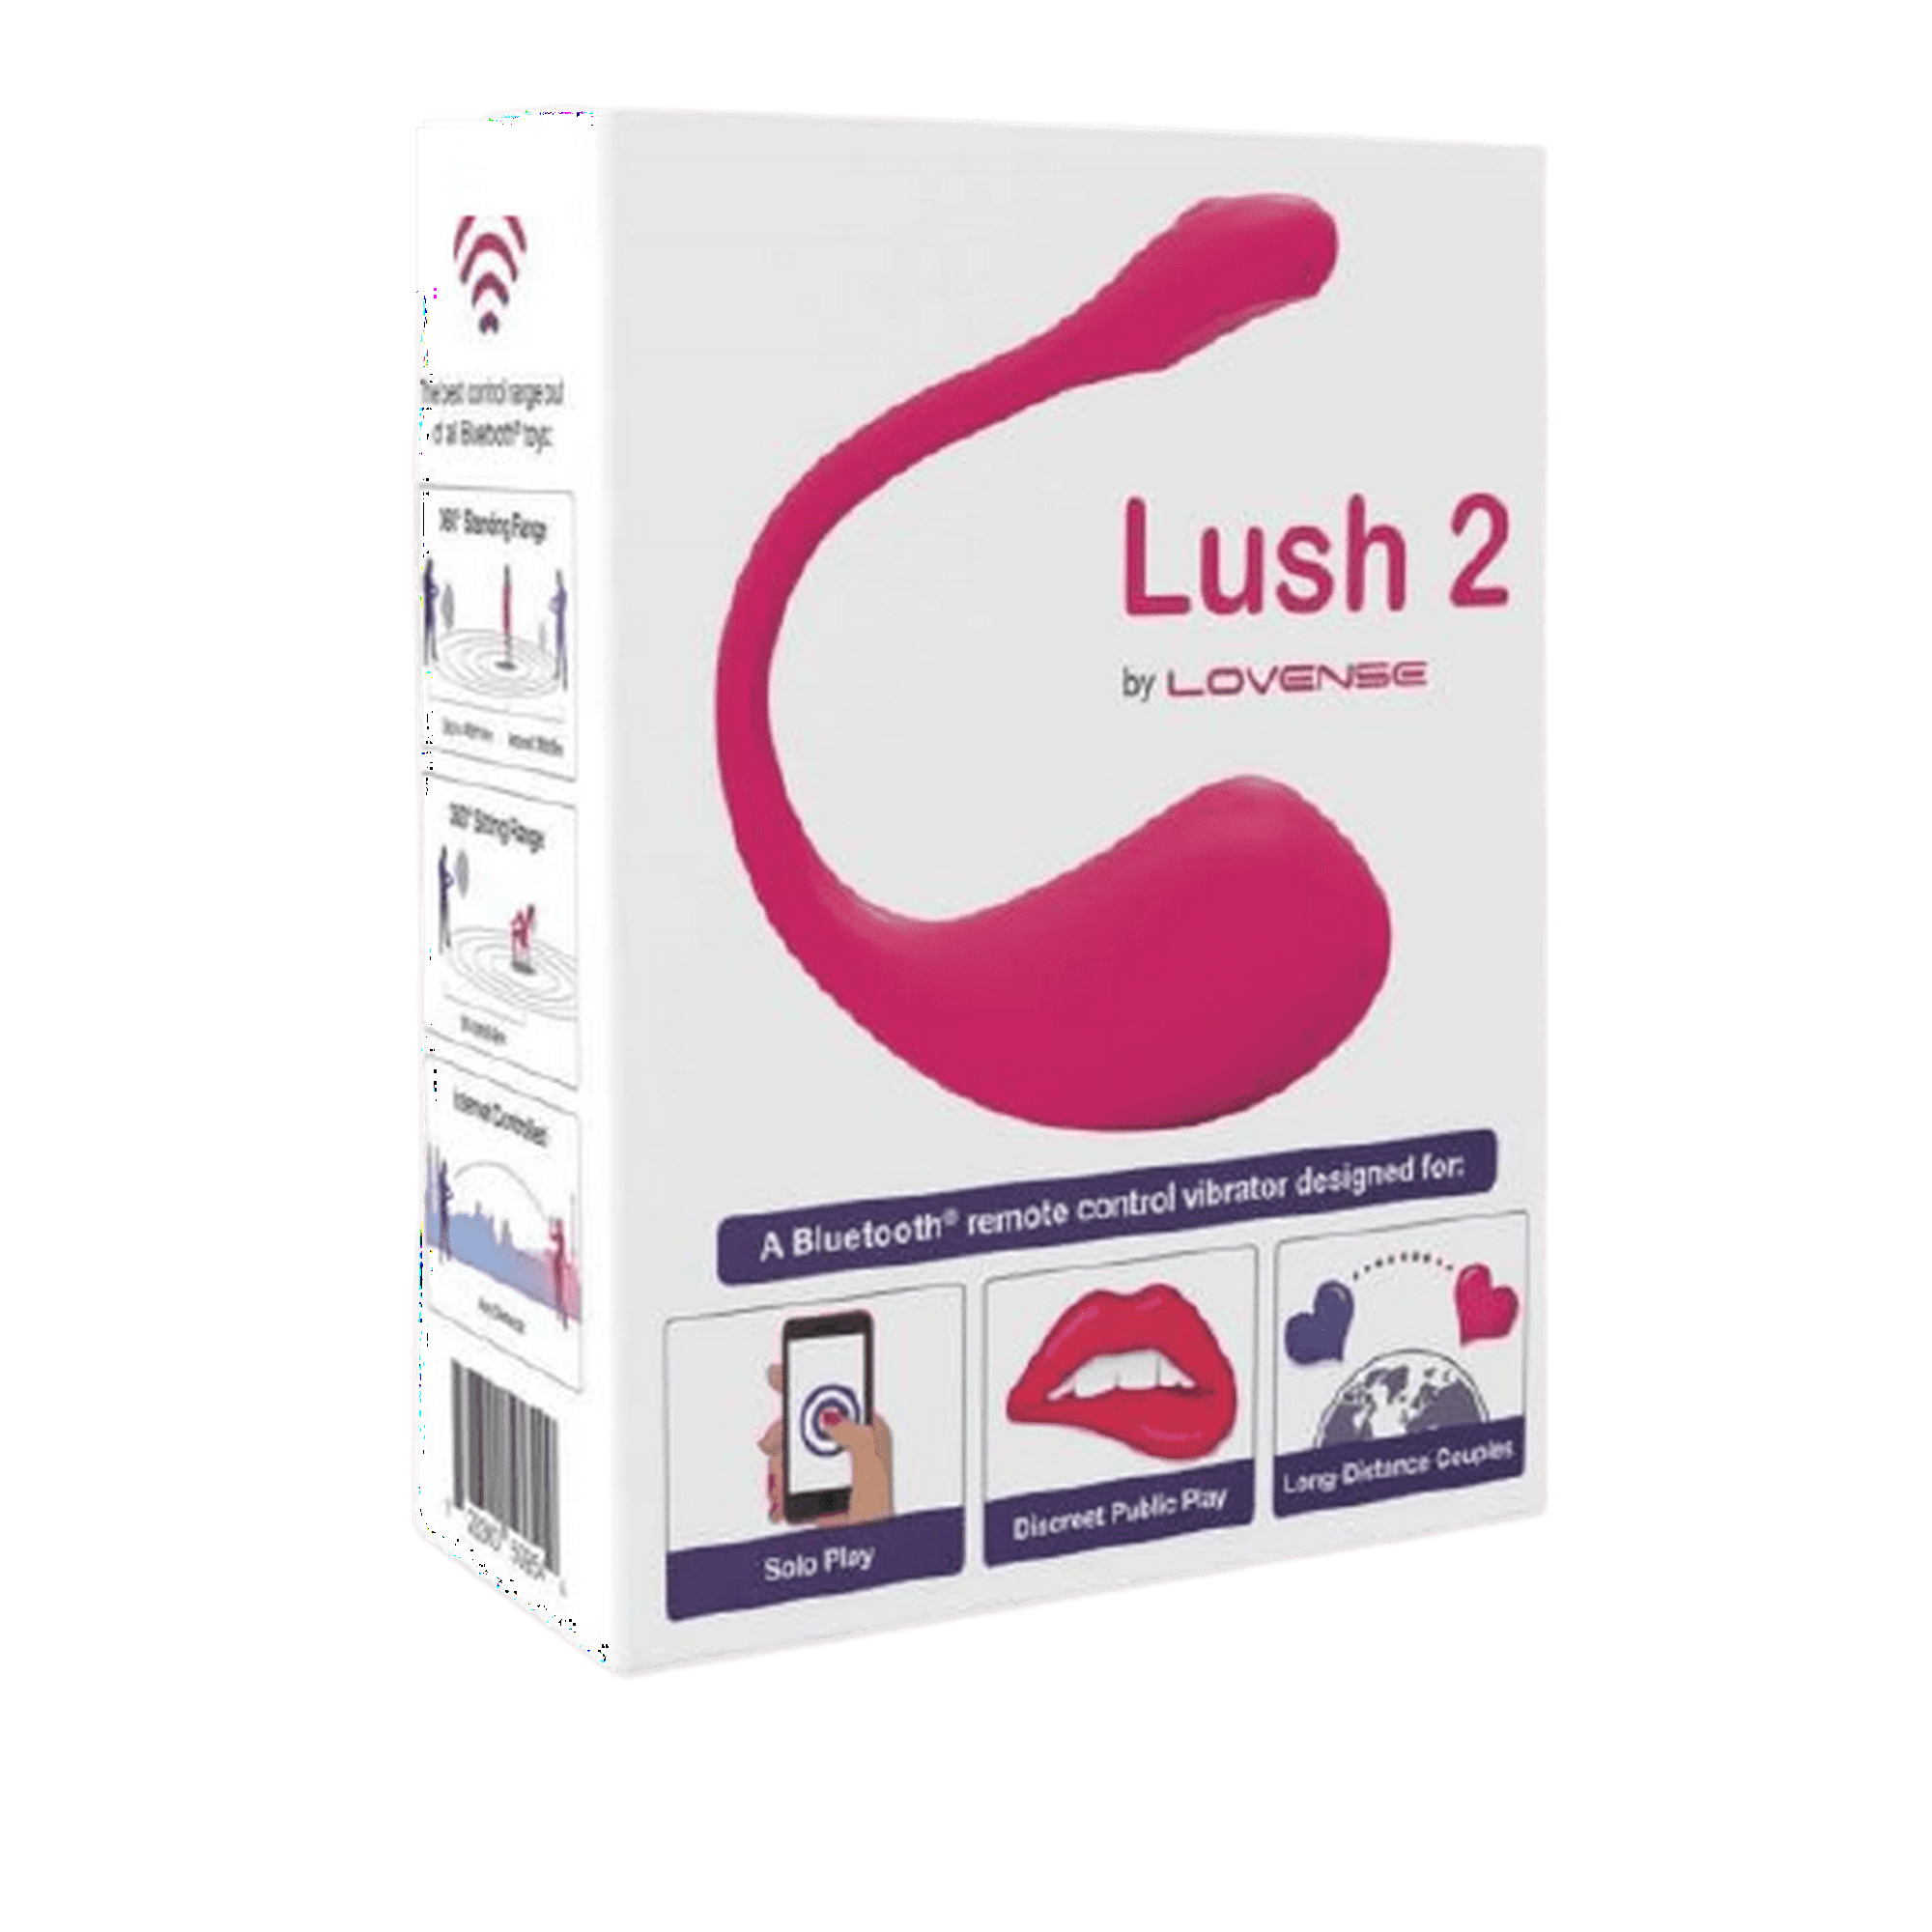 Lush2 Useful Lovense